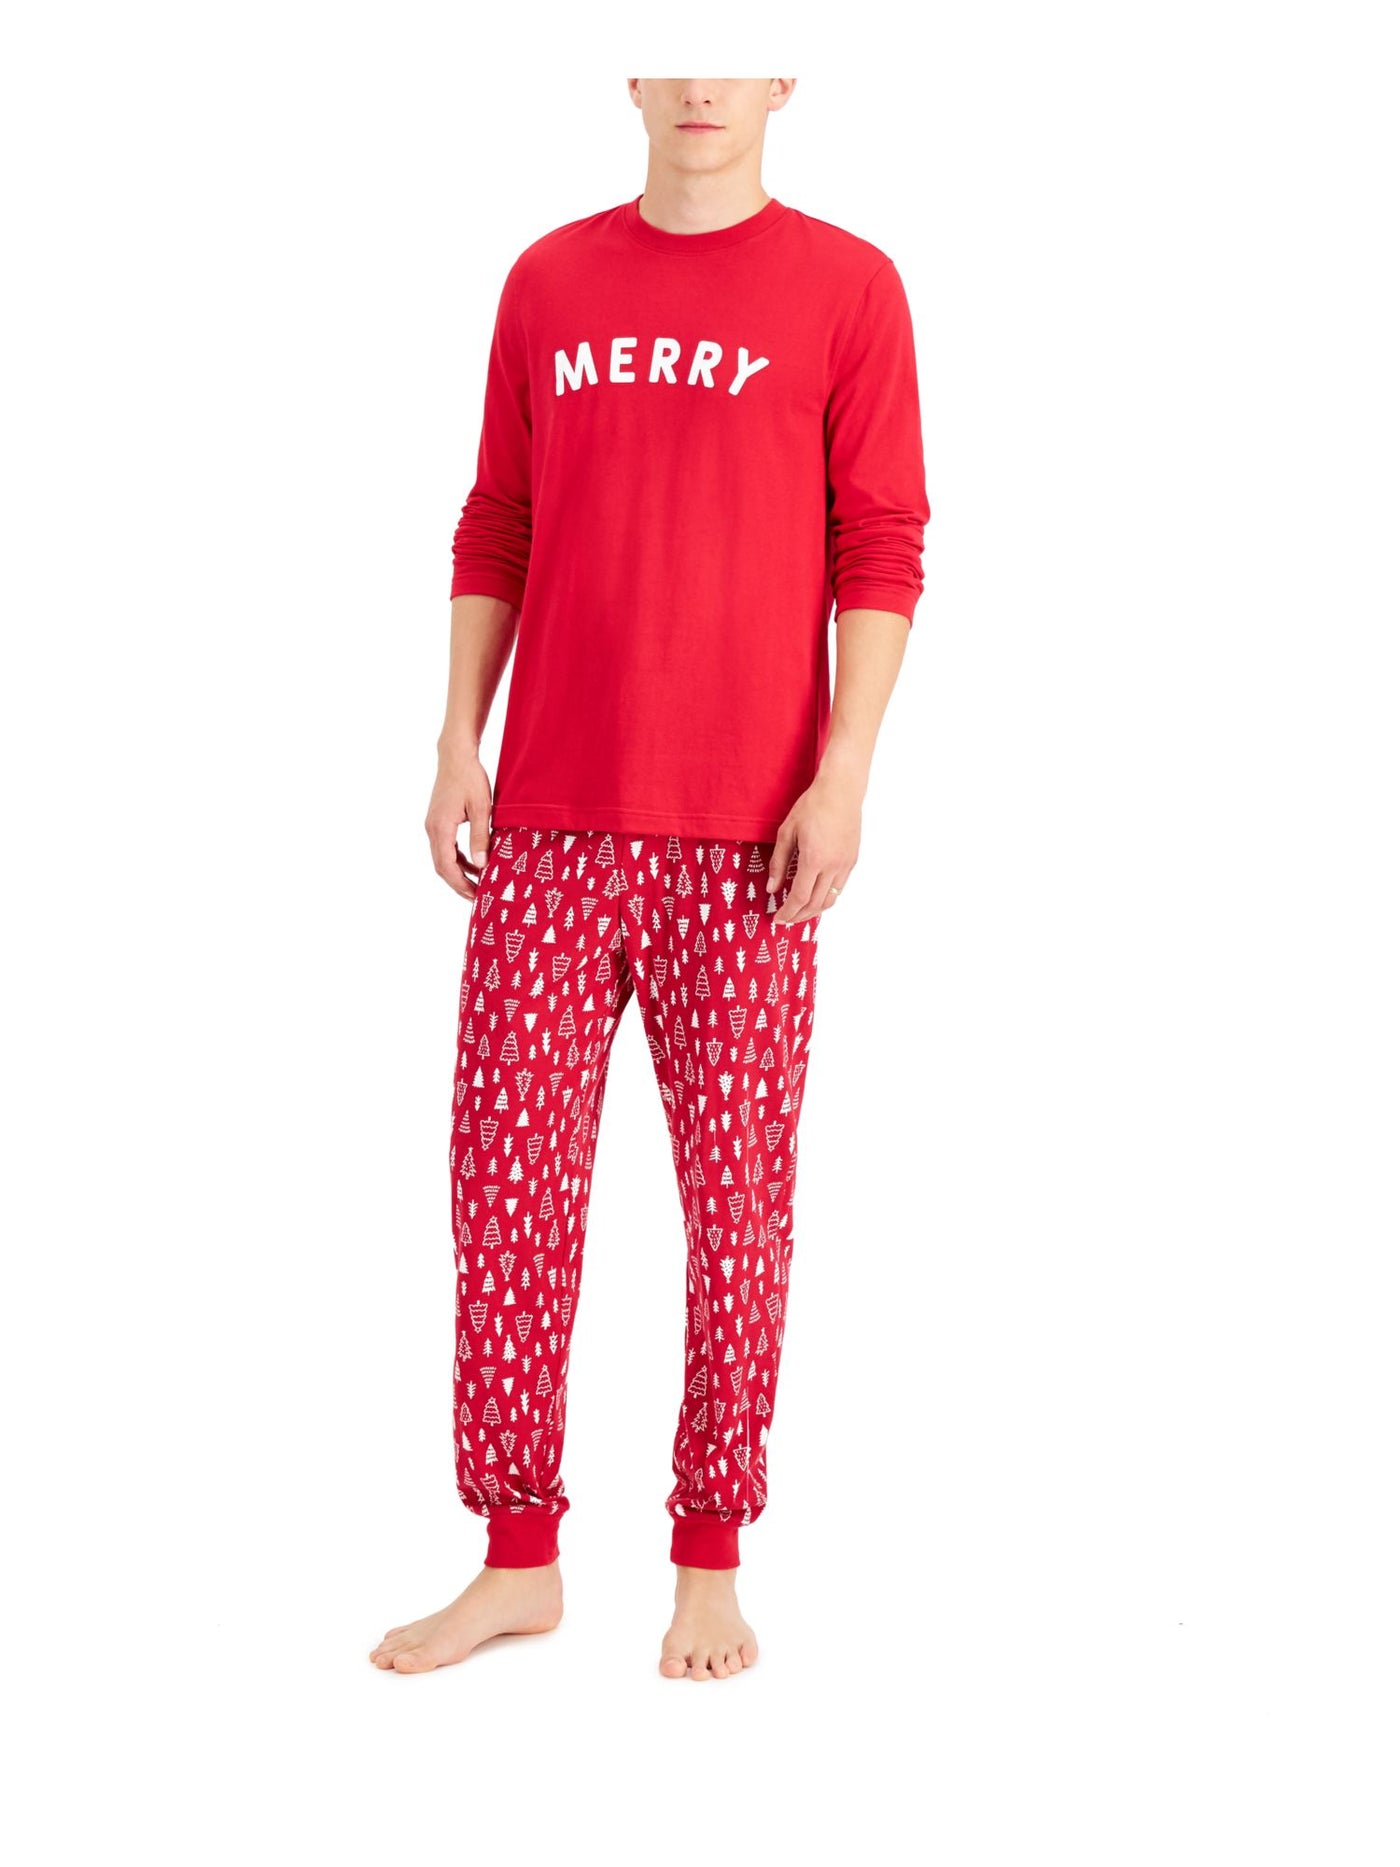 FAMILY PJs Mens Red Printed Elastic Band Long Sleeve T-Shirt Top Cuffed Pants Pajamas Big & Tall 1XB